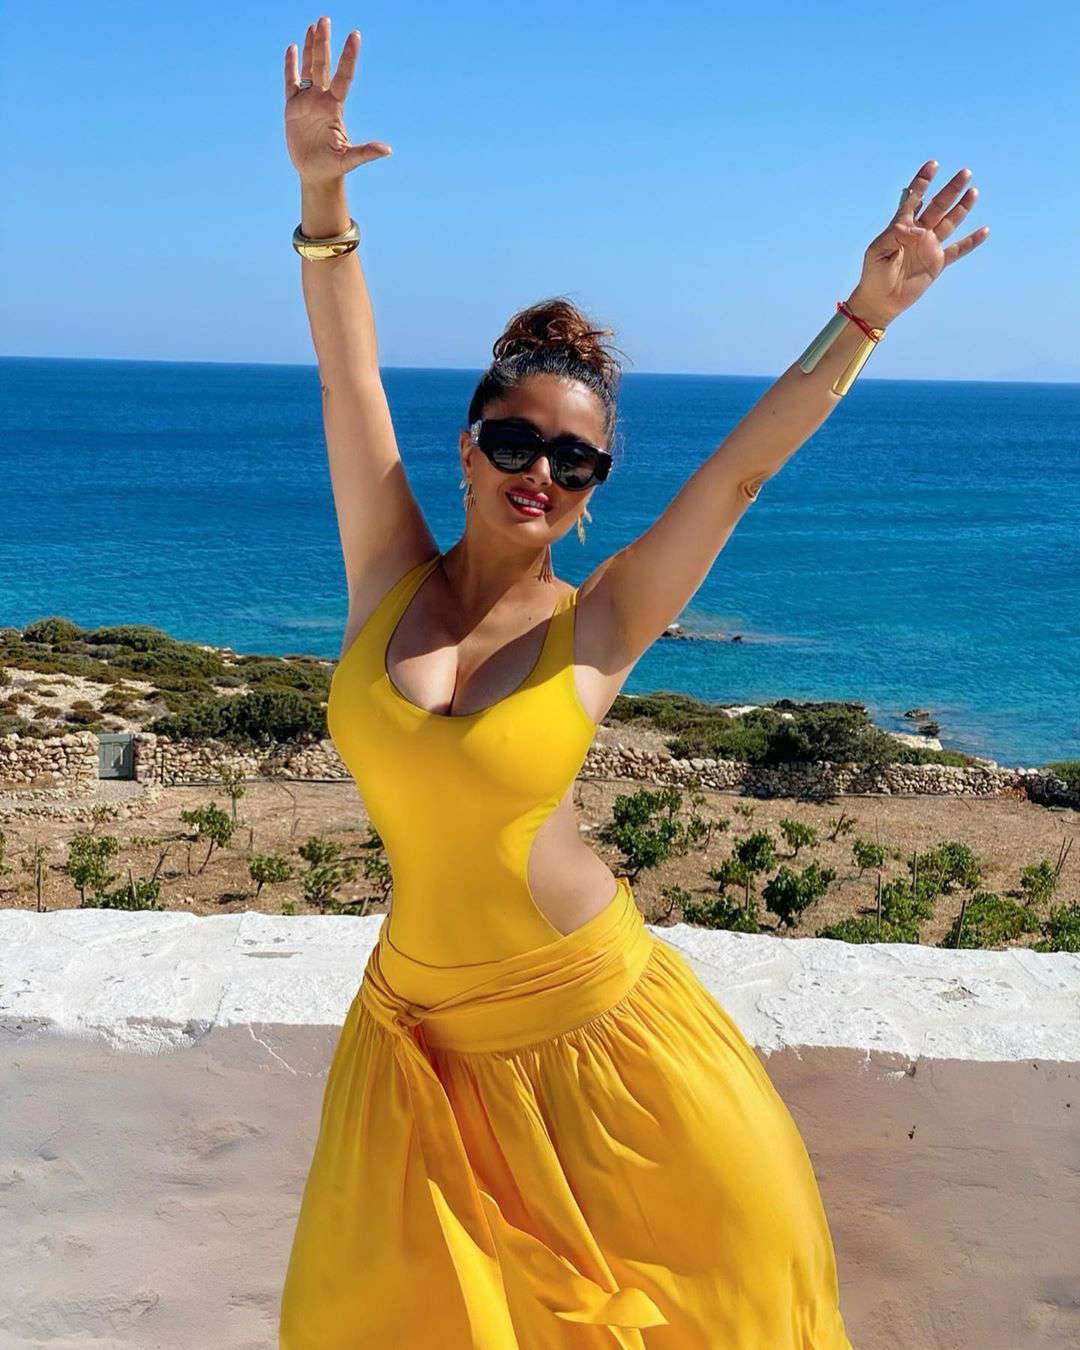 Salma Hayek Pinault Celebrates 54th Birthday in Vibrant Yellow Cutout Swimsuit | PEOPLE.com